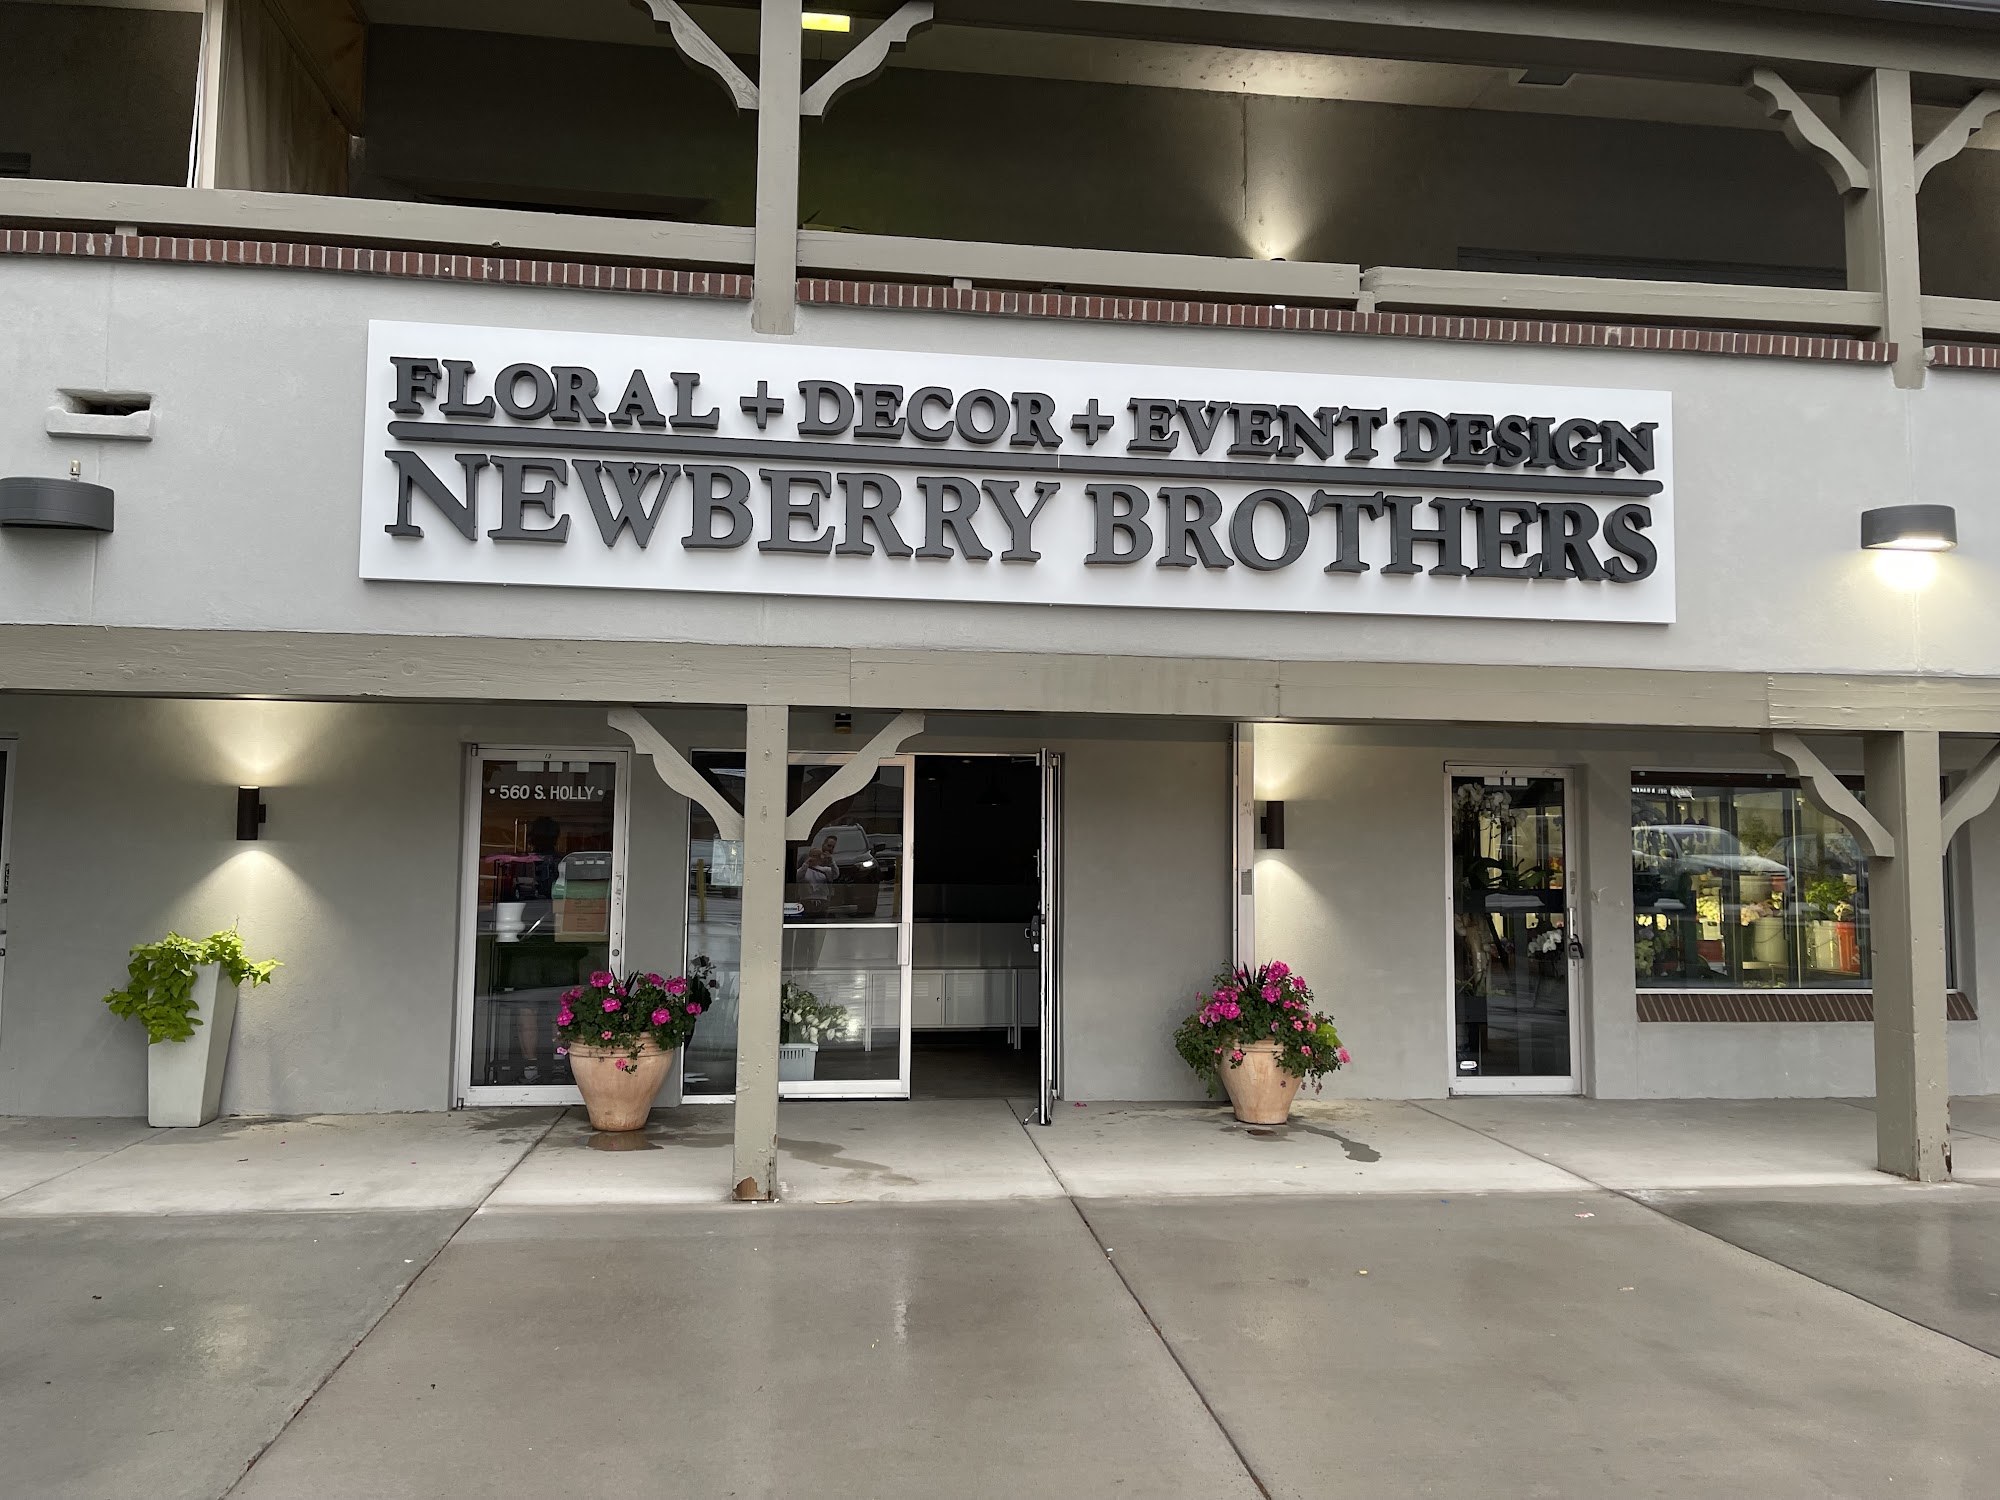 Newberry Brothers Florist